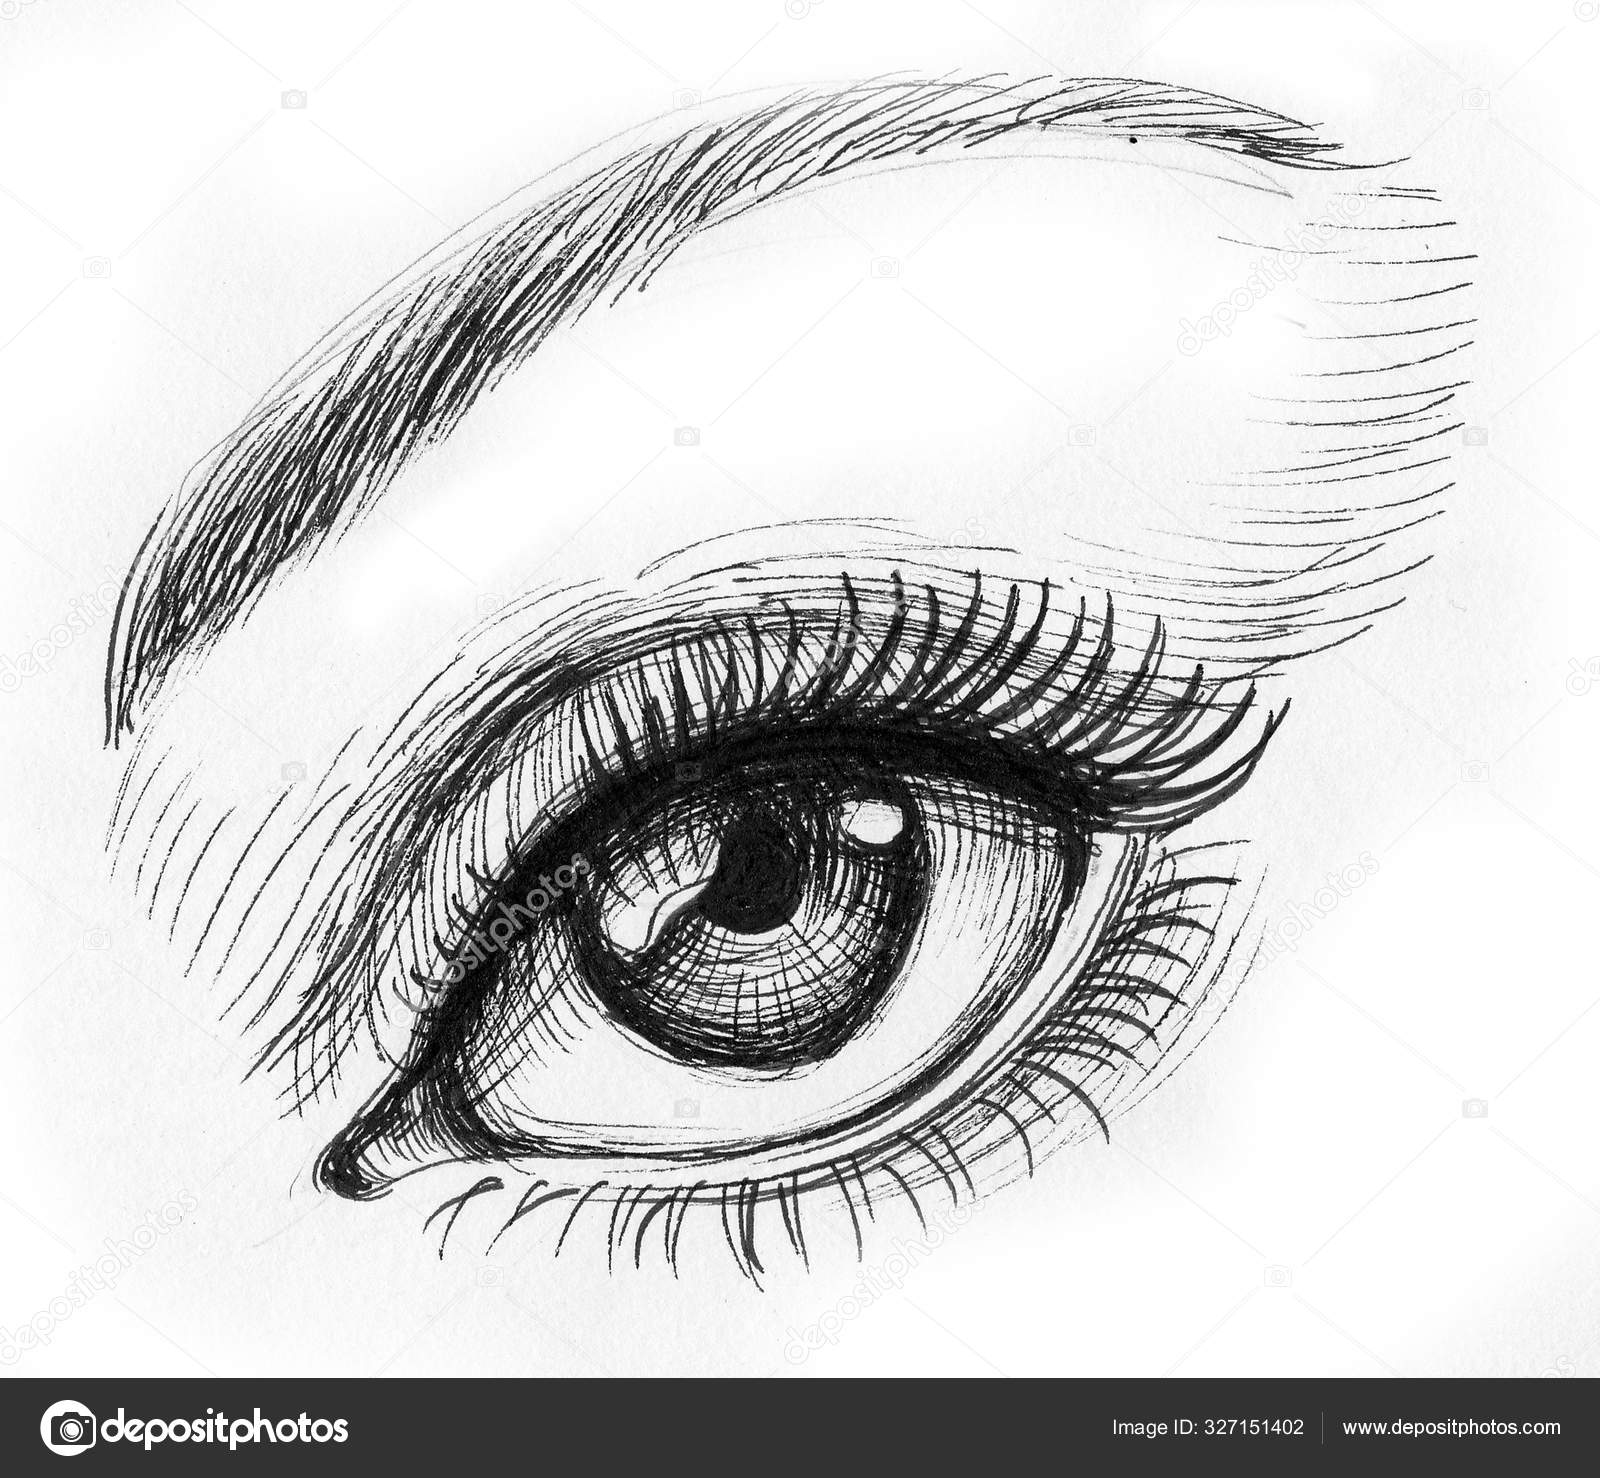 How to Draw Eyes of Girl/ Beautiful Eyes sketch/كيفية رسم عيون الفتاة -  YouTube